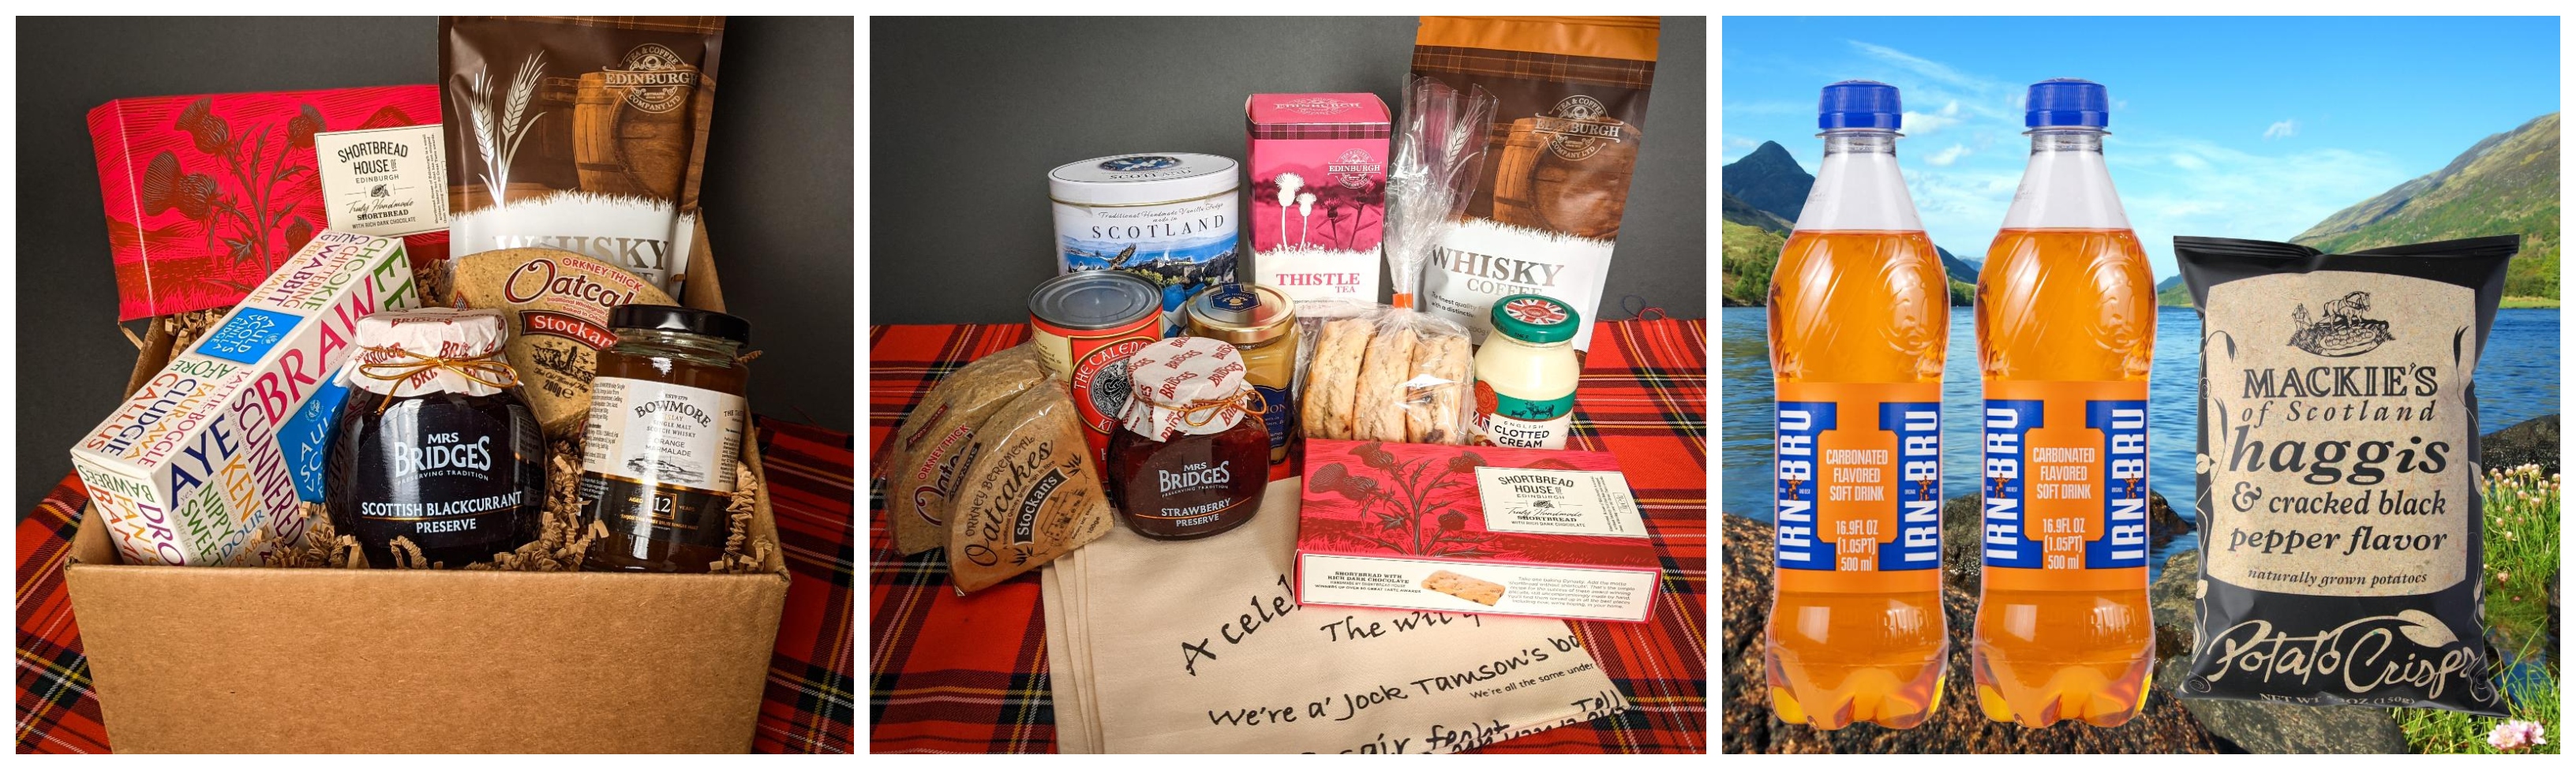 The Scottish Grocer Kits